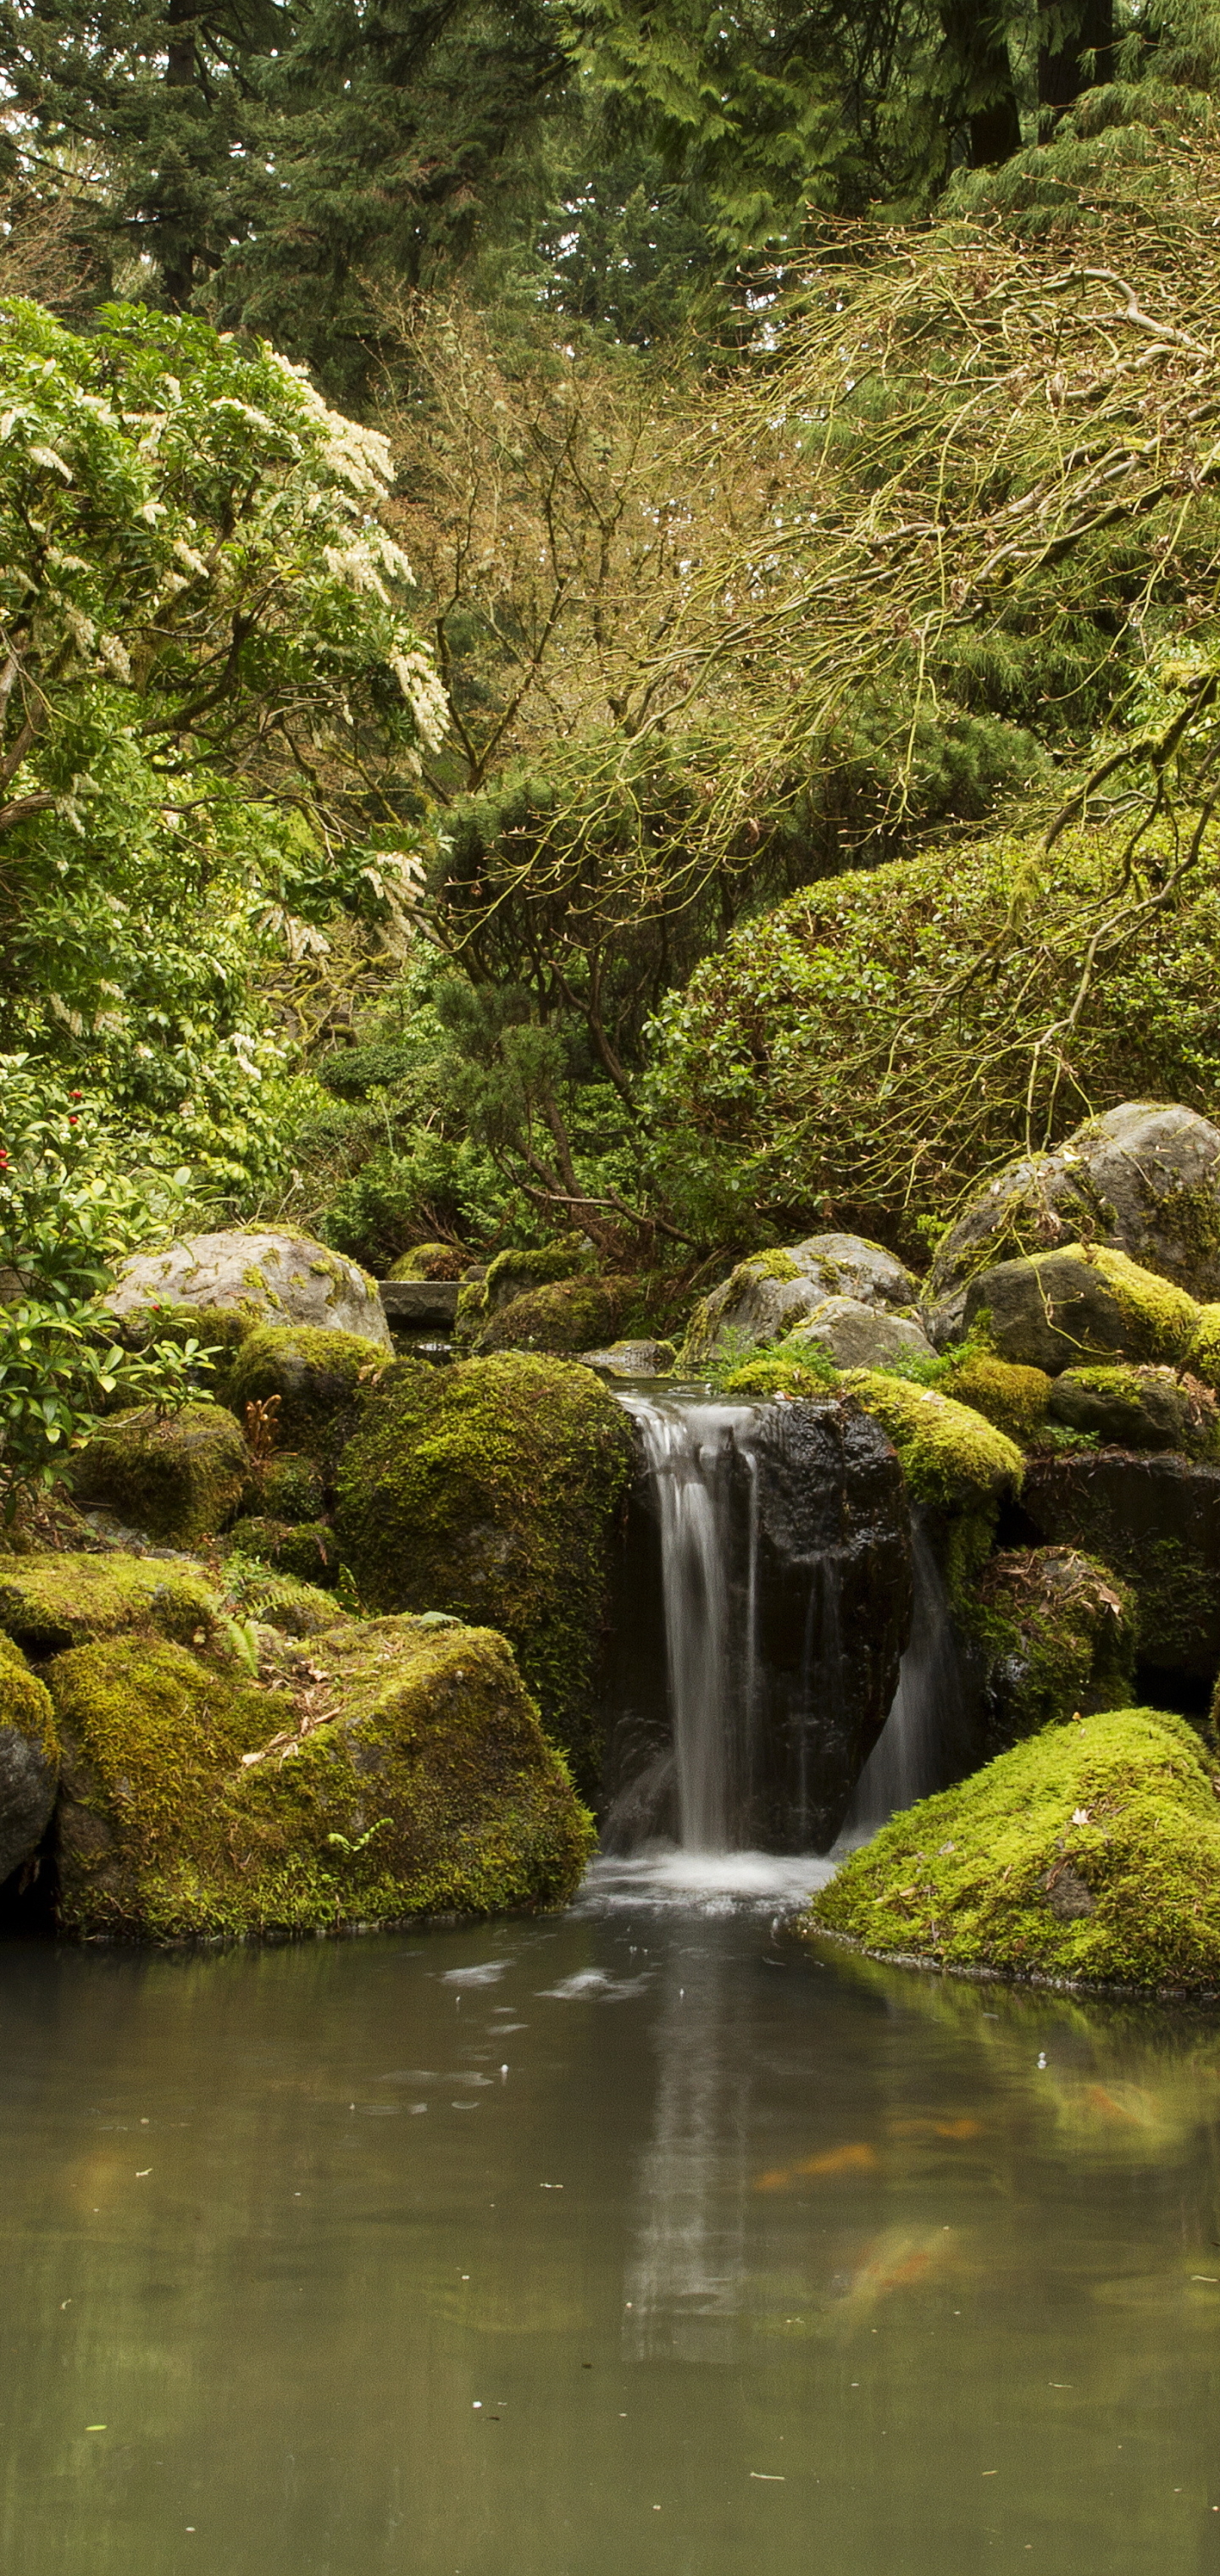 Descarga gratuita de fondo de pantalla para móvil de Naturaleza, Arbusto, Cascada, Estanque, Koi, Hecho Por El Hombre, Jardín Japonés.